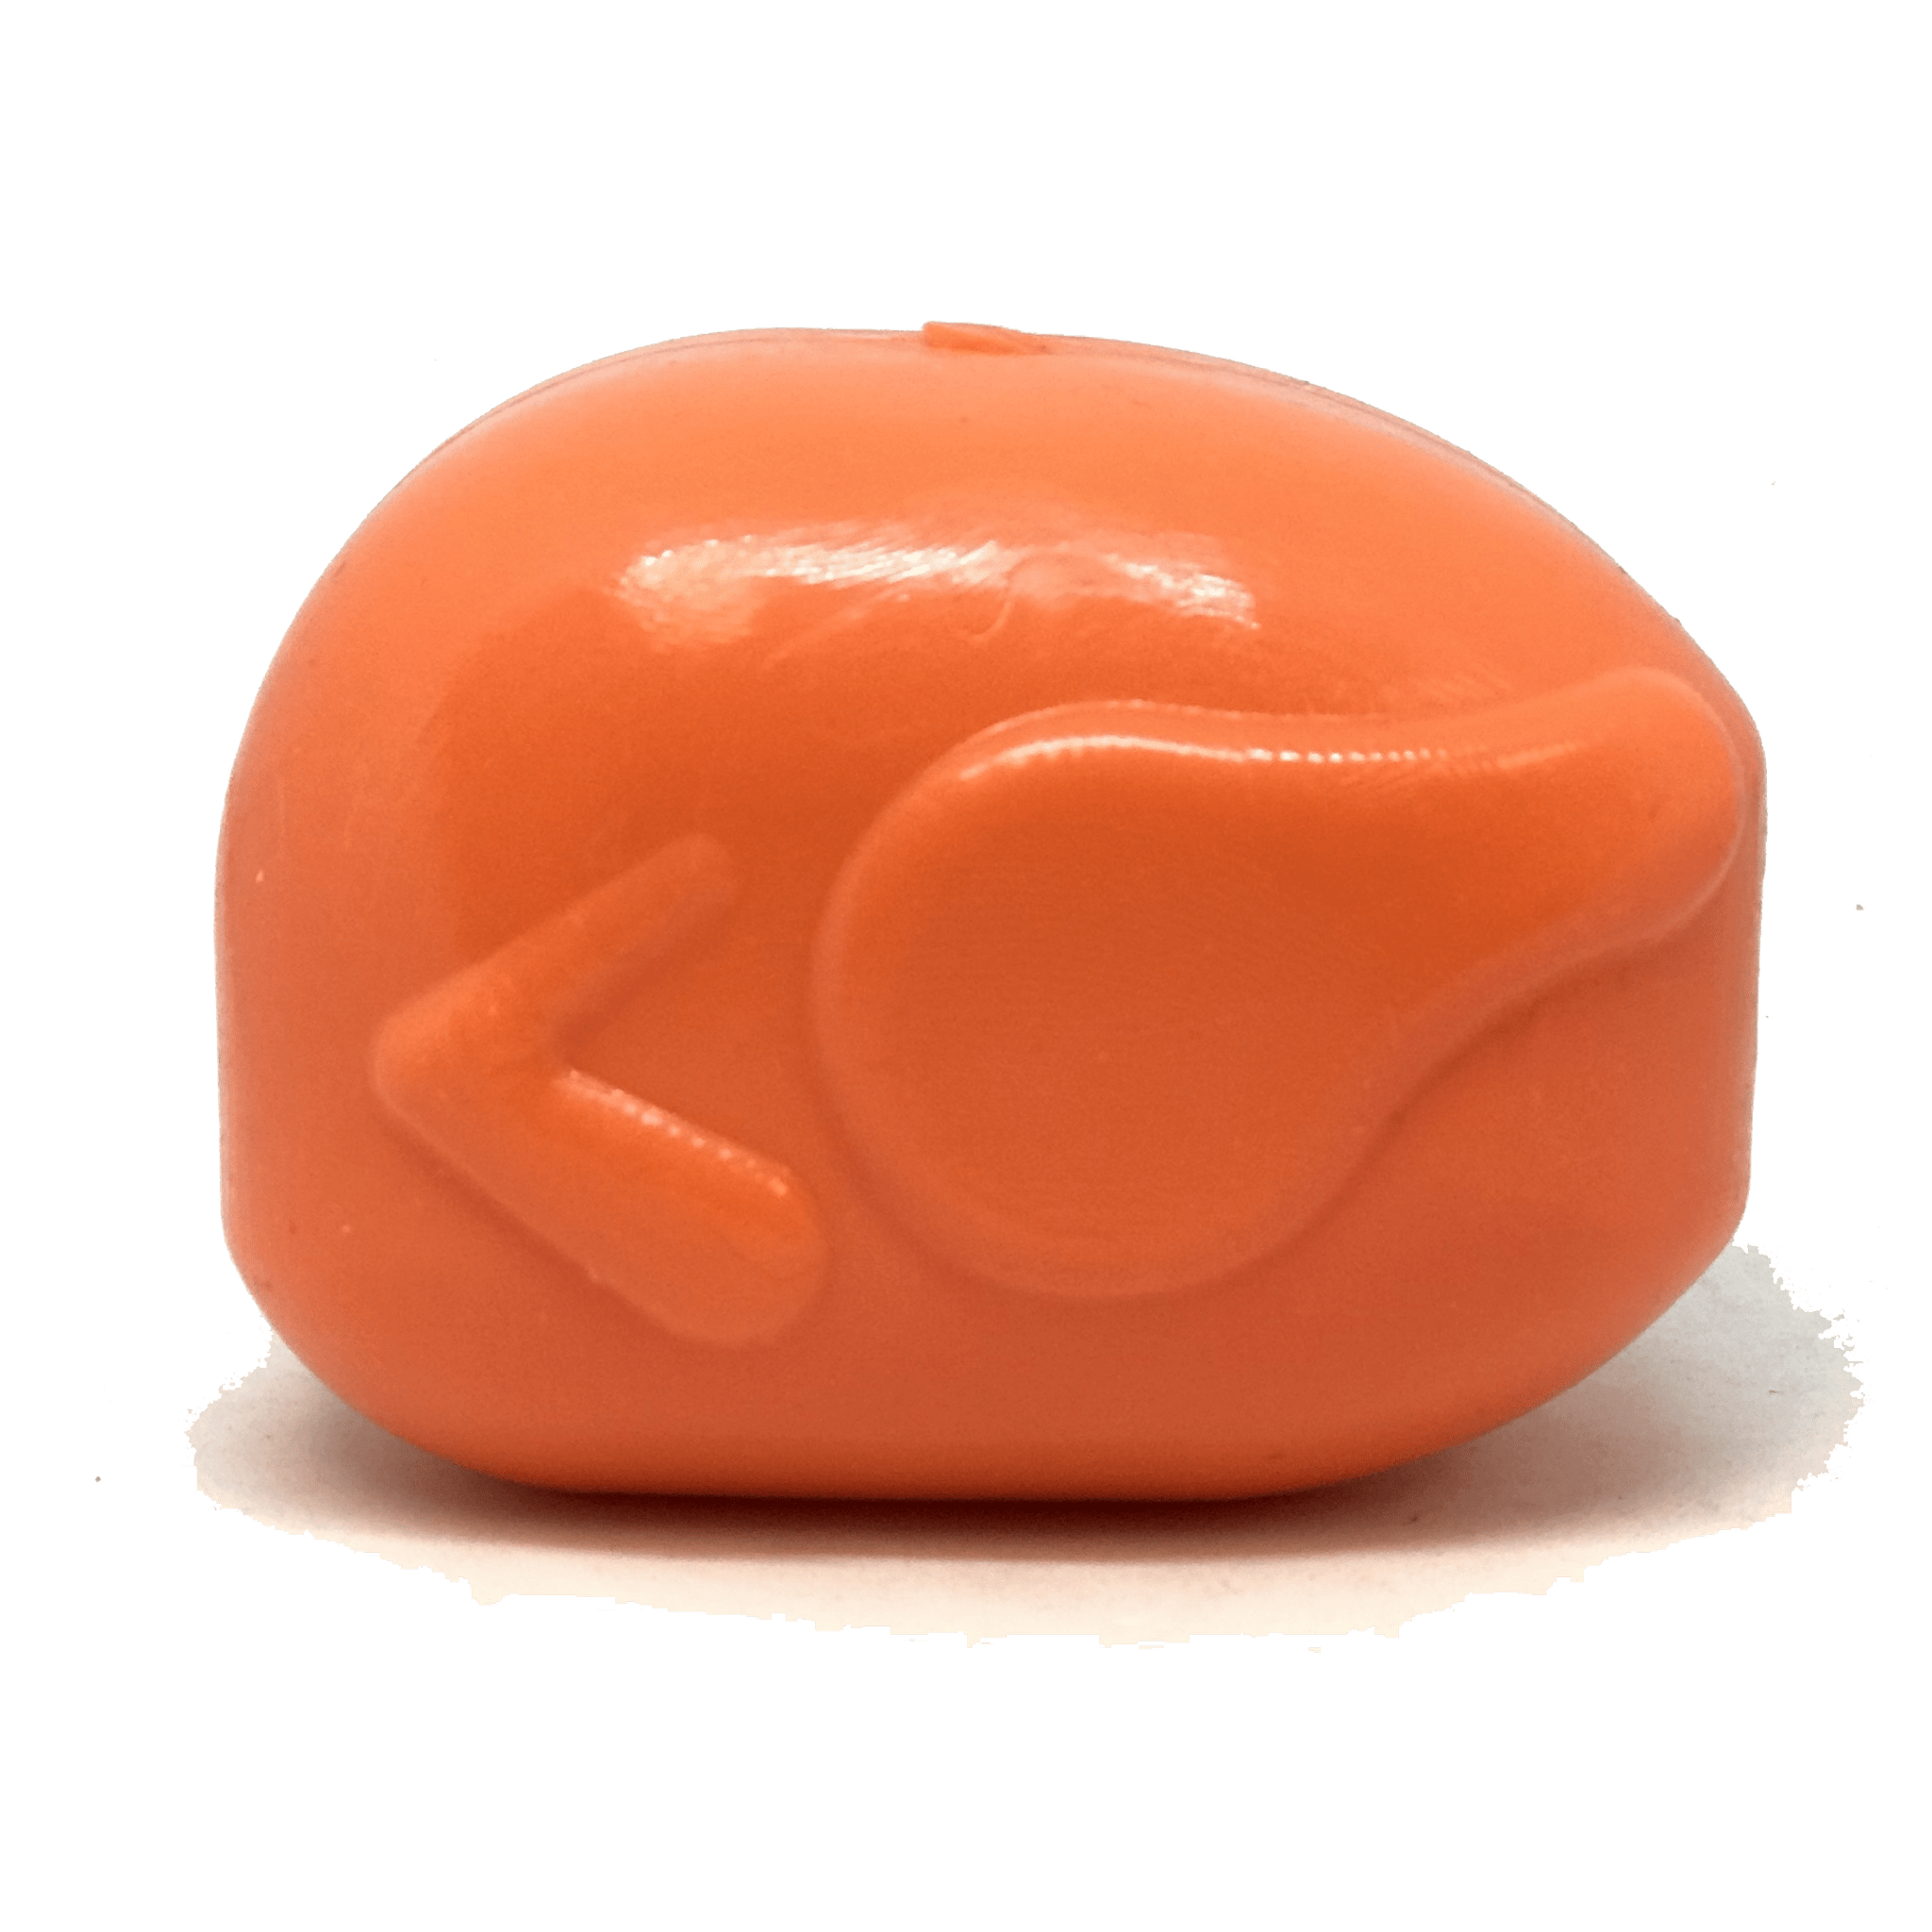 MKB Roasted Turkey Durable Rubber Chew Toy & Treat Dispenser - Medium - Orange - Medium Roasted Turkey Toy